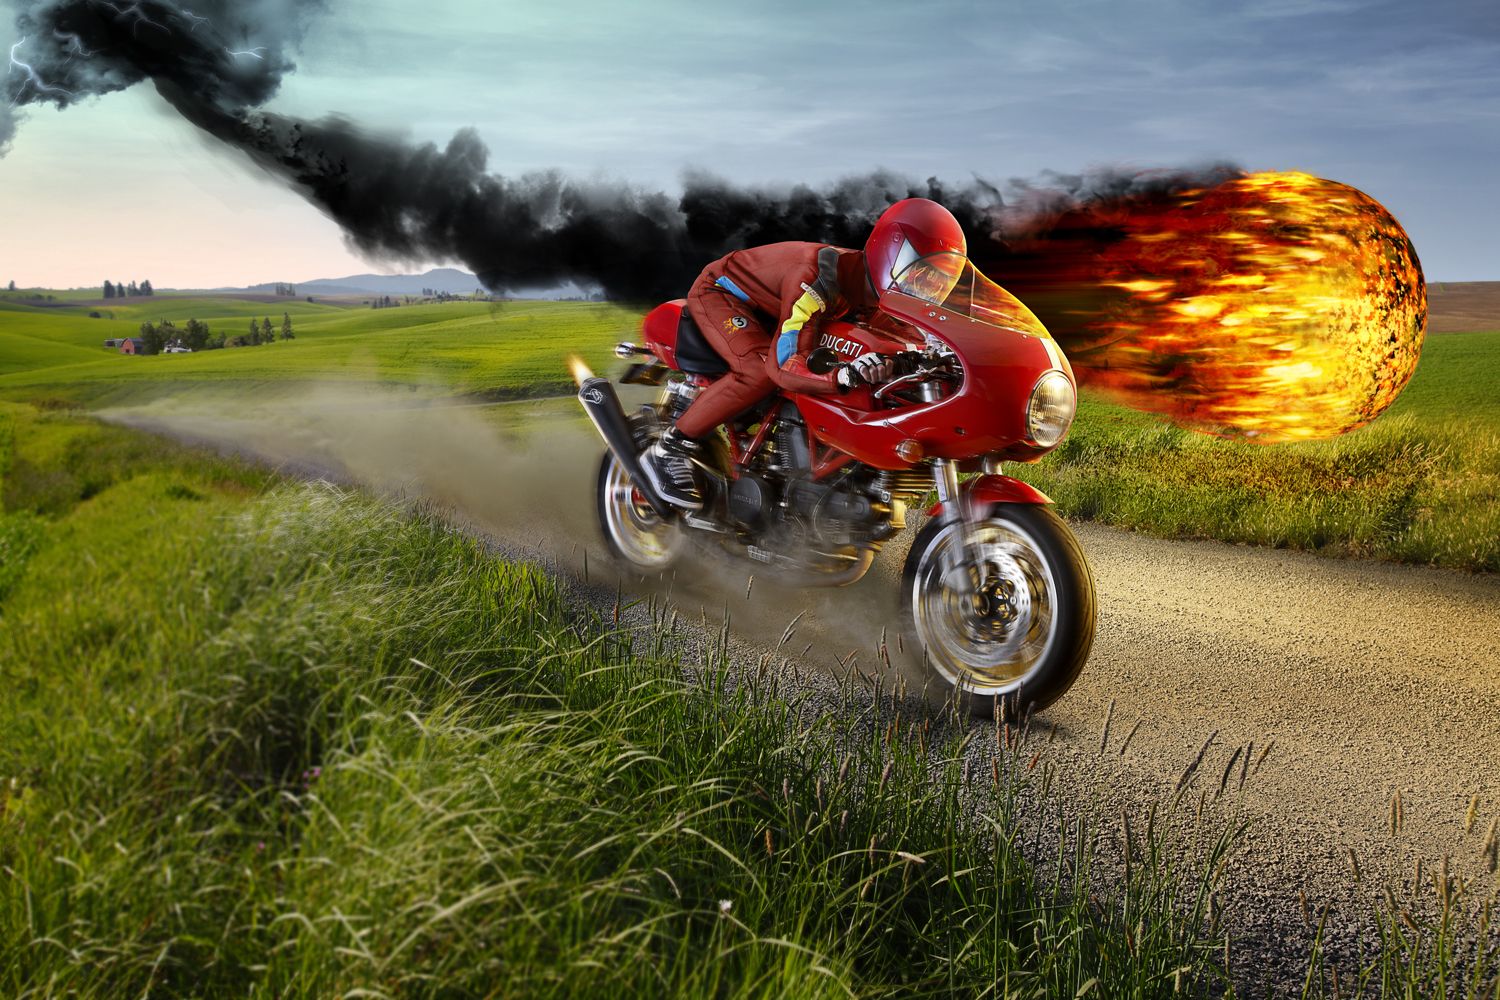 Digital art of Ducati motorcycle racing a fireball through a green field  — Studio 3, Inc.